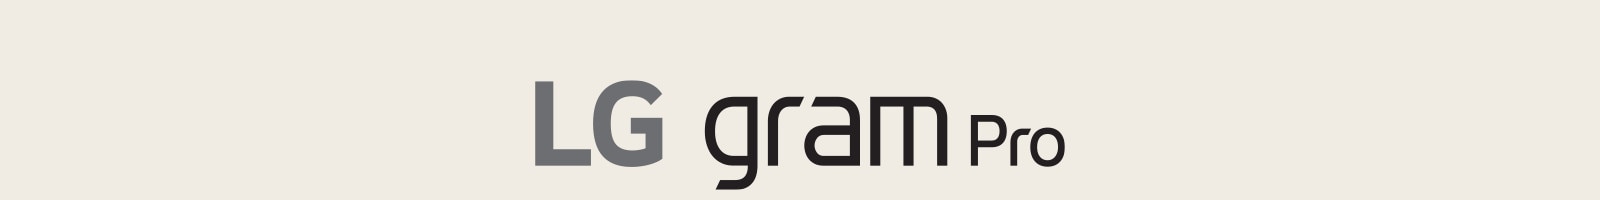 LG gram Pro logo.	